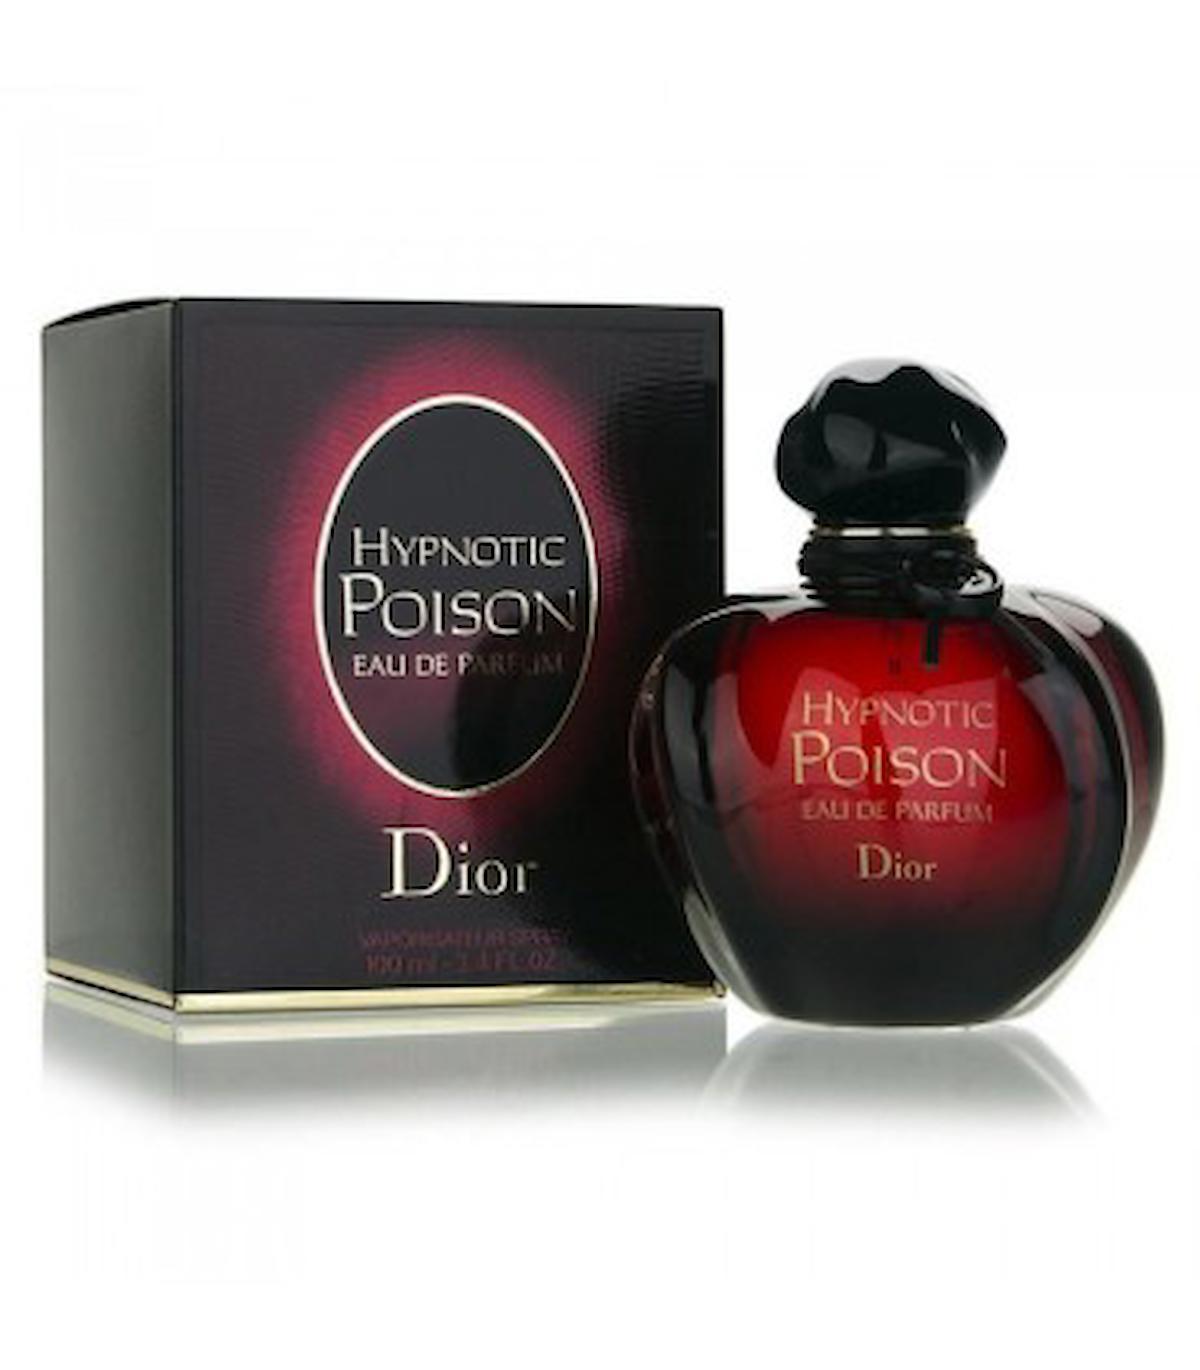 Dior Hypnotic Poison EDP Oryantal Kadın Parfüm 100 ml